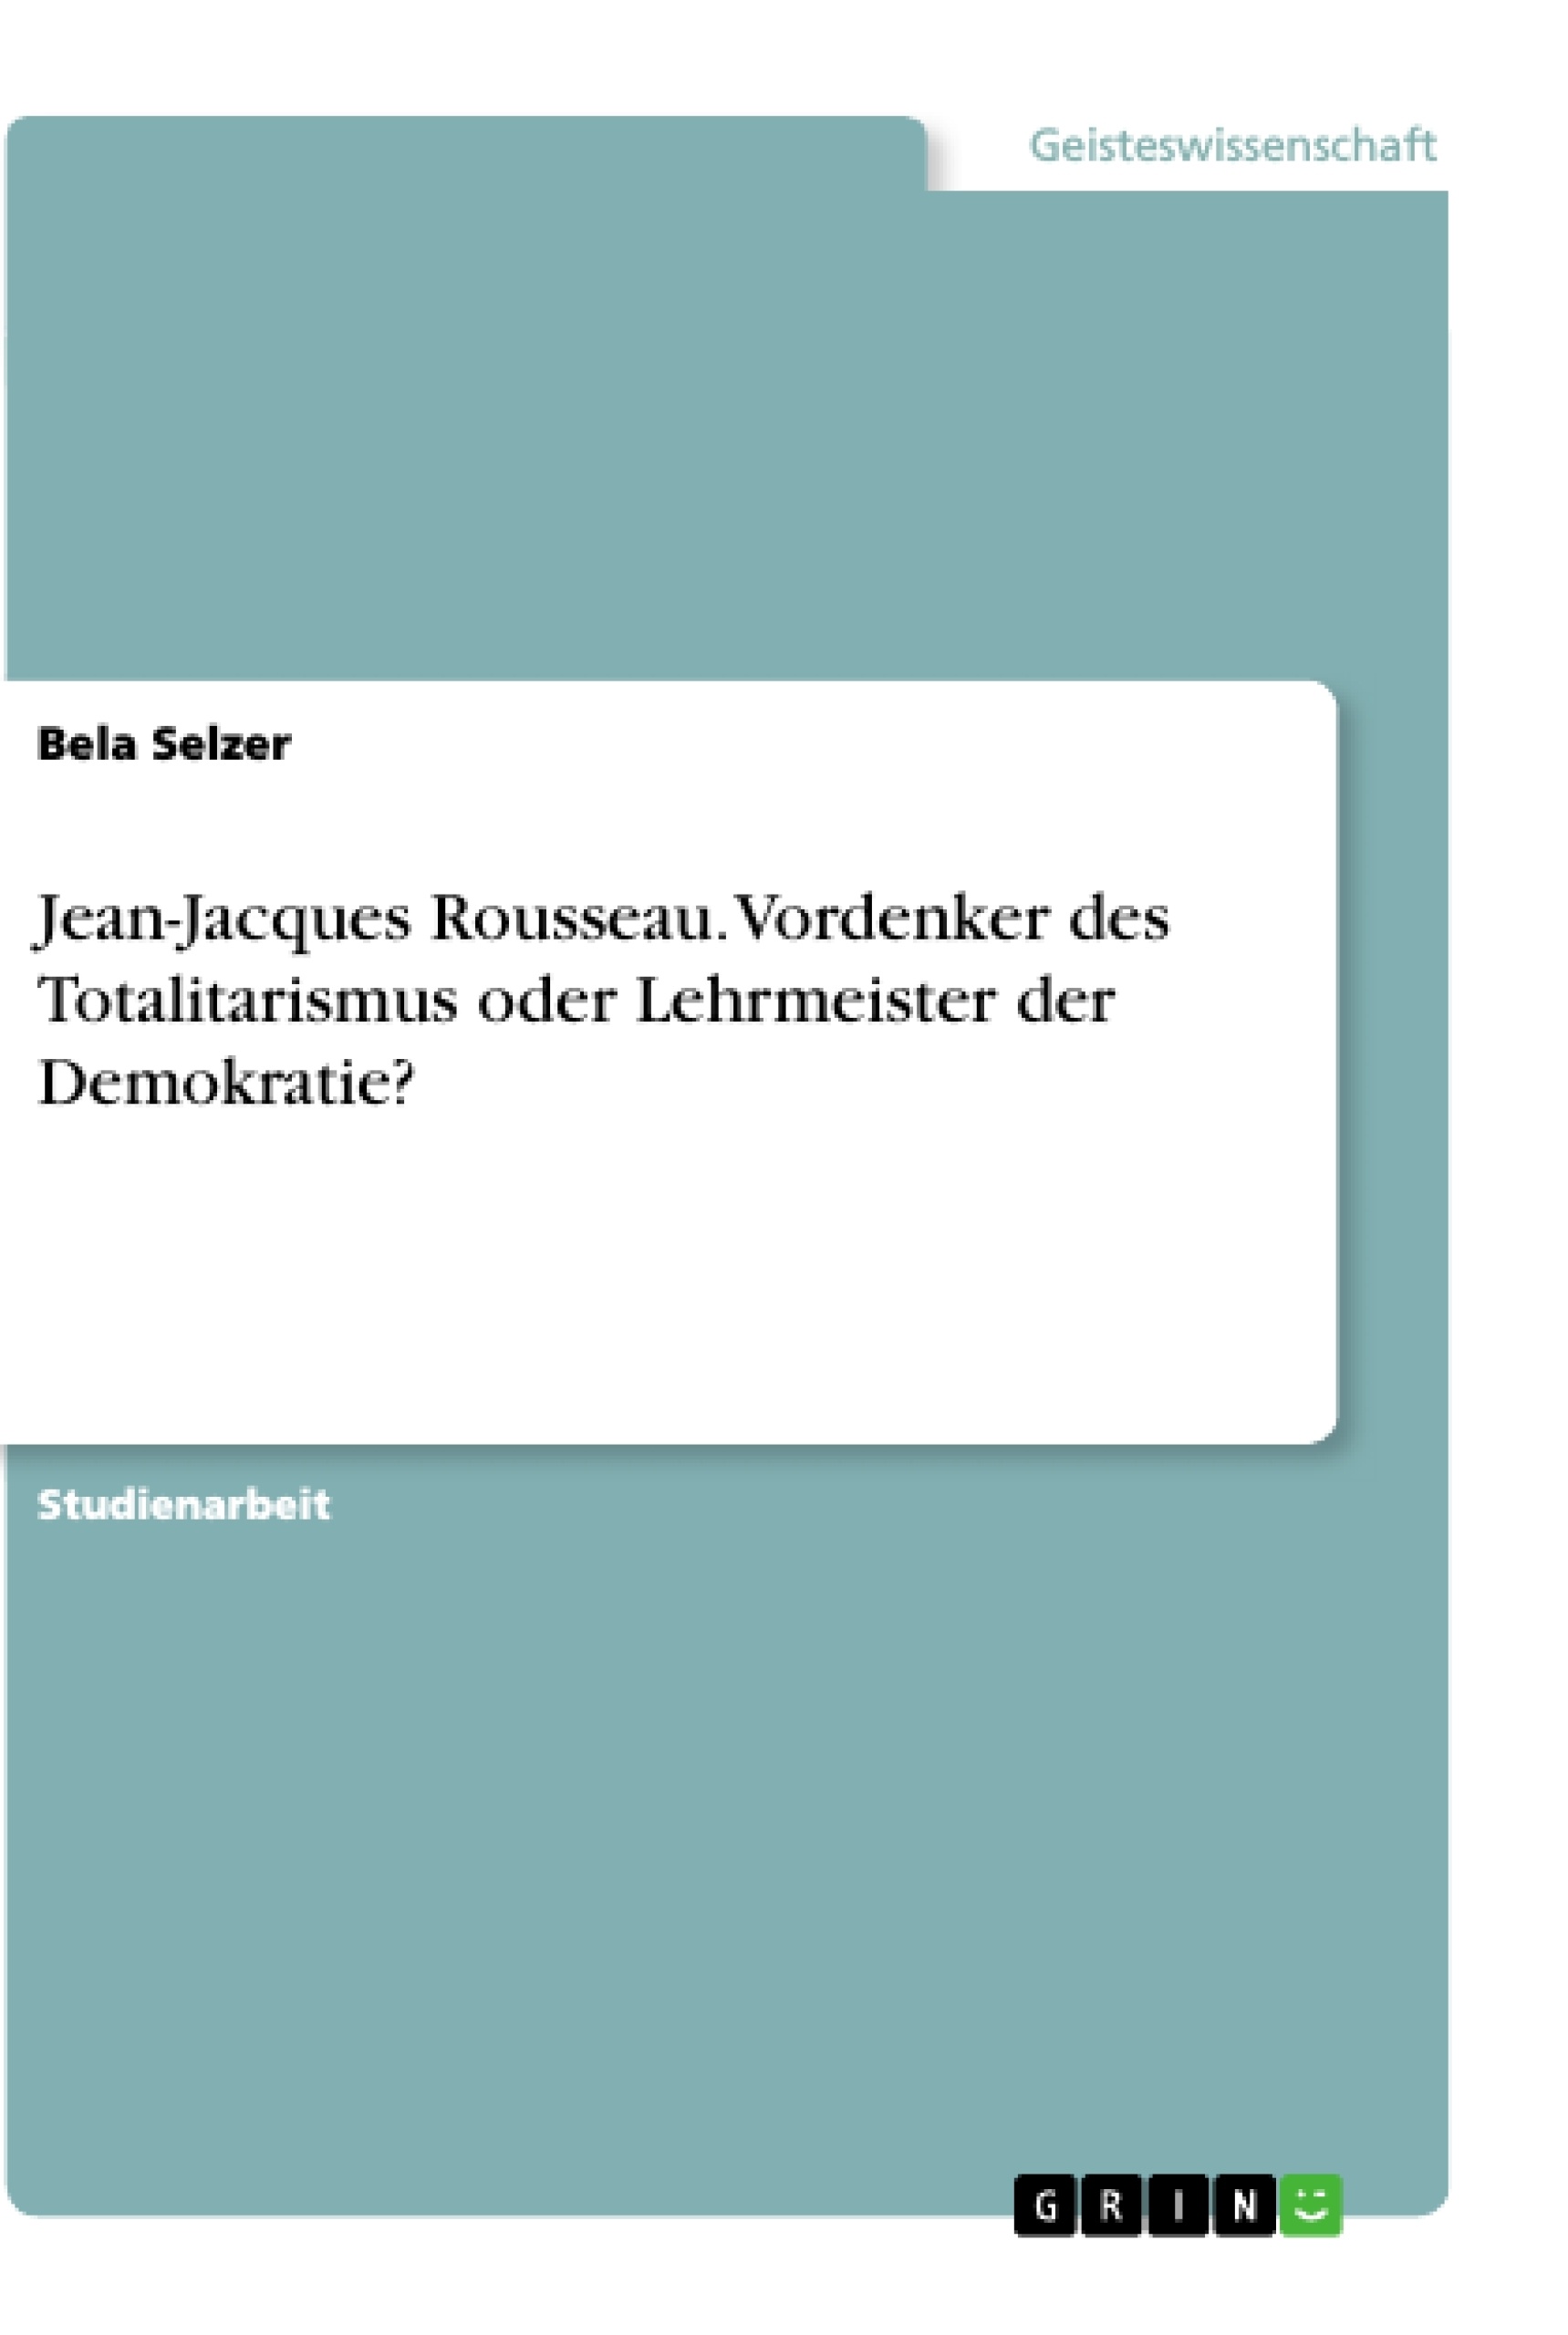 Titre: Jean-Jacques Rousseau. Vordenker des Totalitarismus oder Lehrmeister der Demokratie?